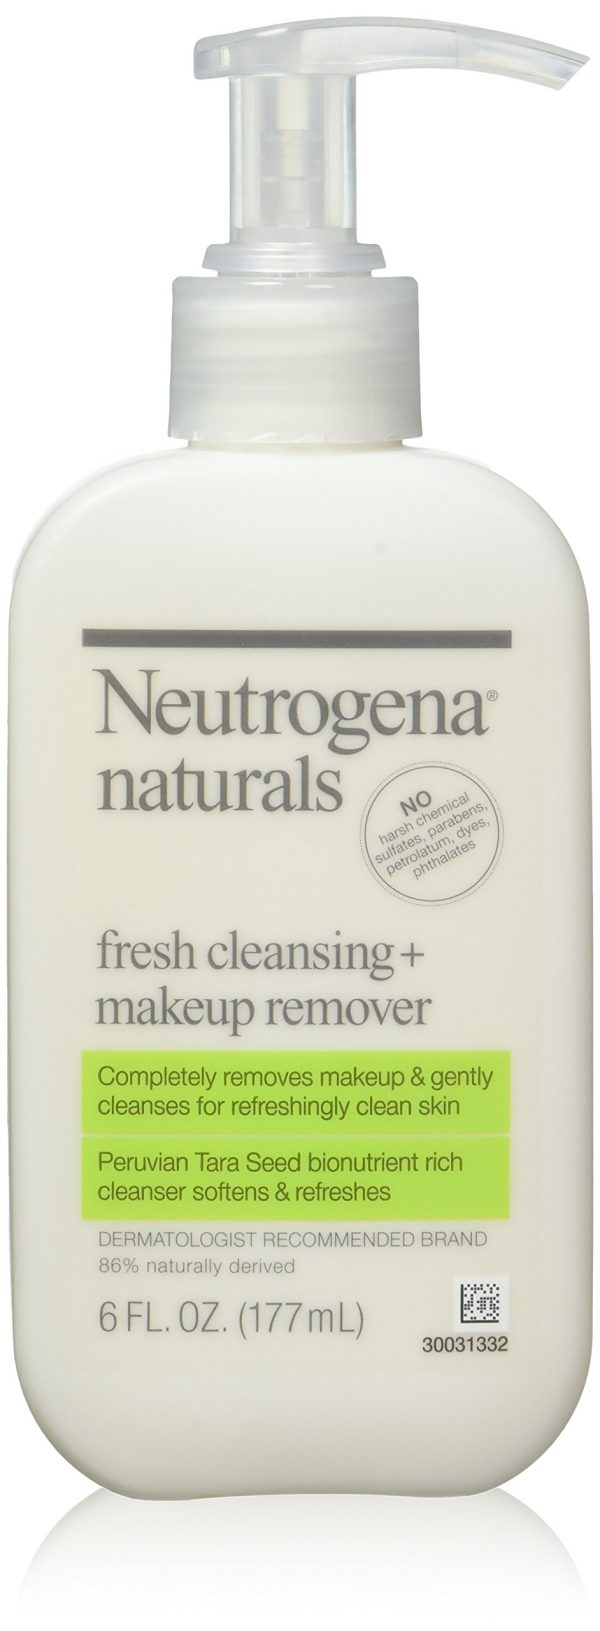 Makeup Remover Neutrogena Naturals Fresh Cleansing